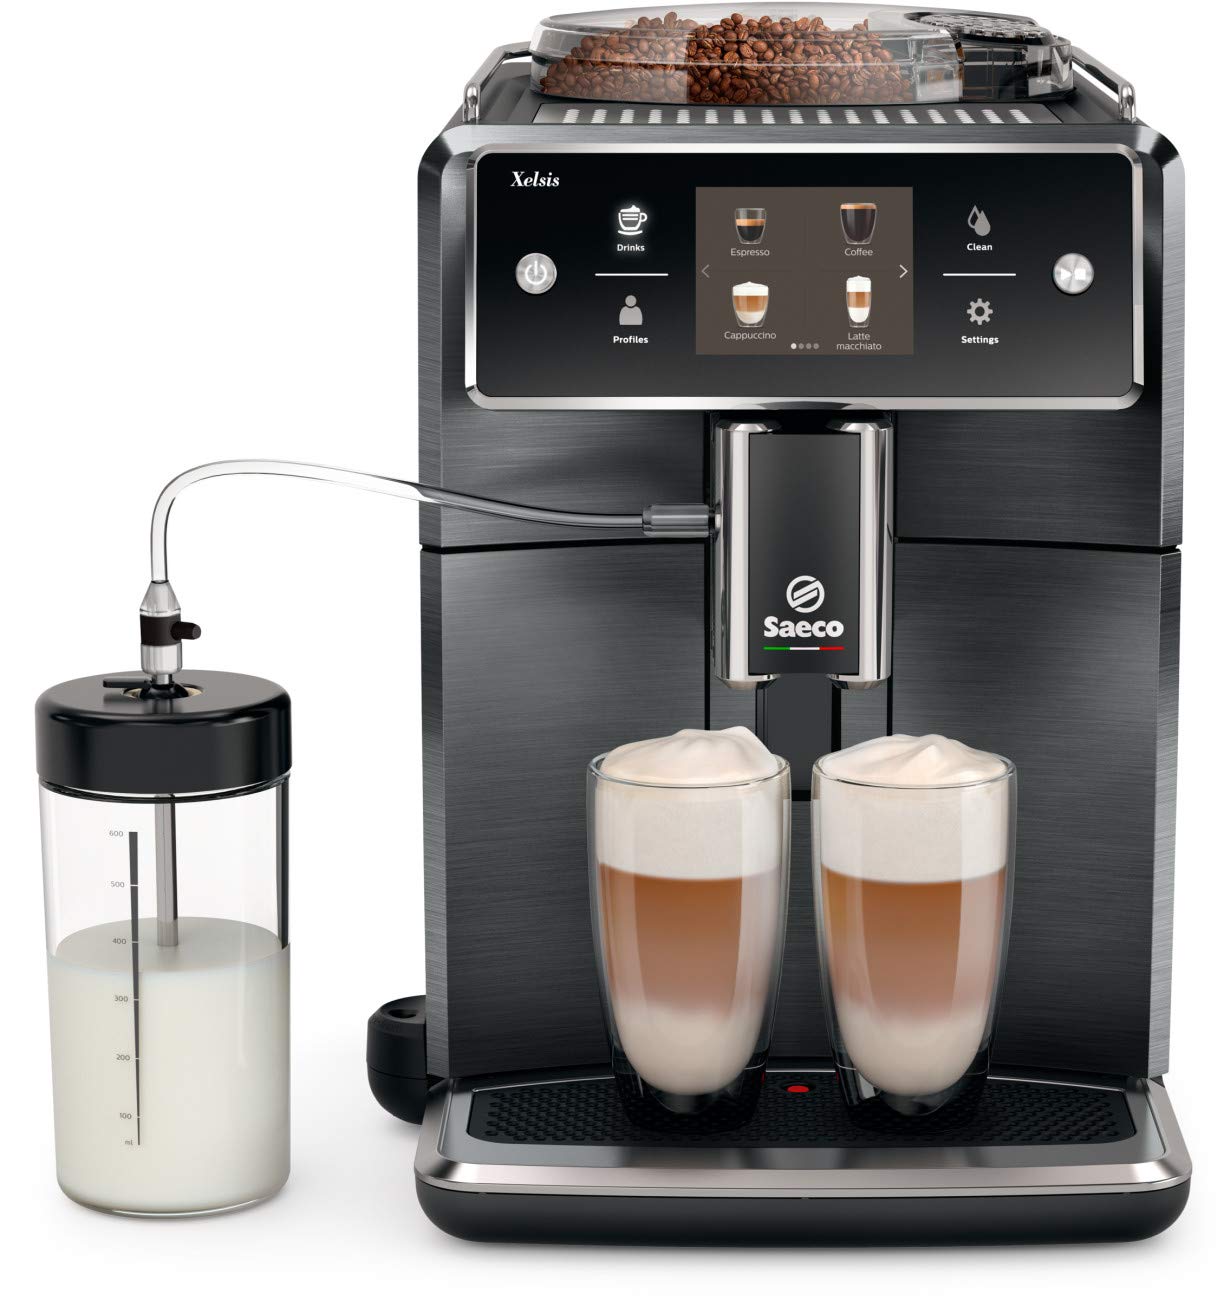 Saeco Xelsis Espresso Machine & Craft Coffee Maker $1279.20